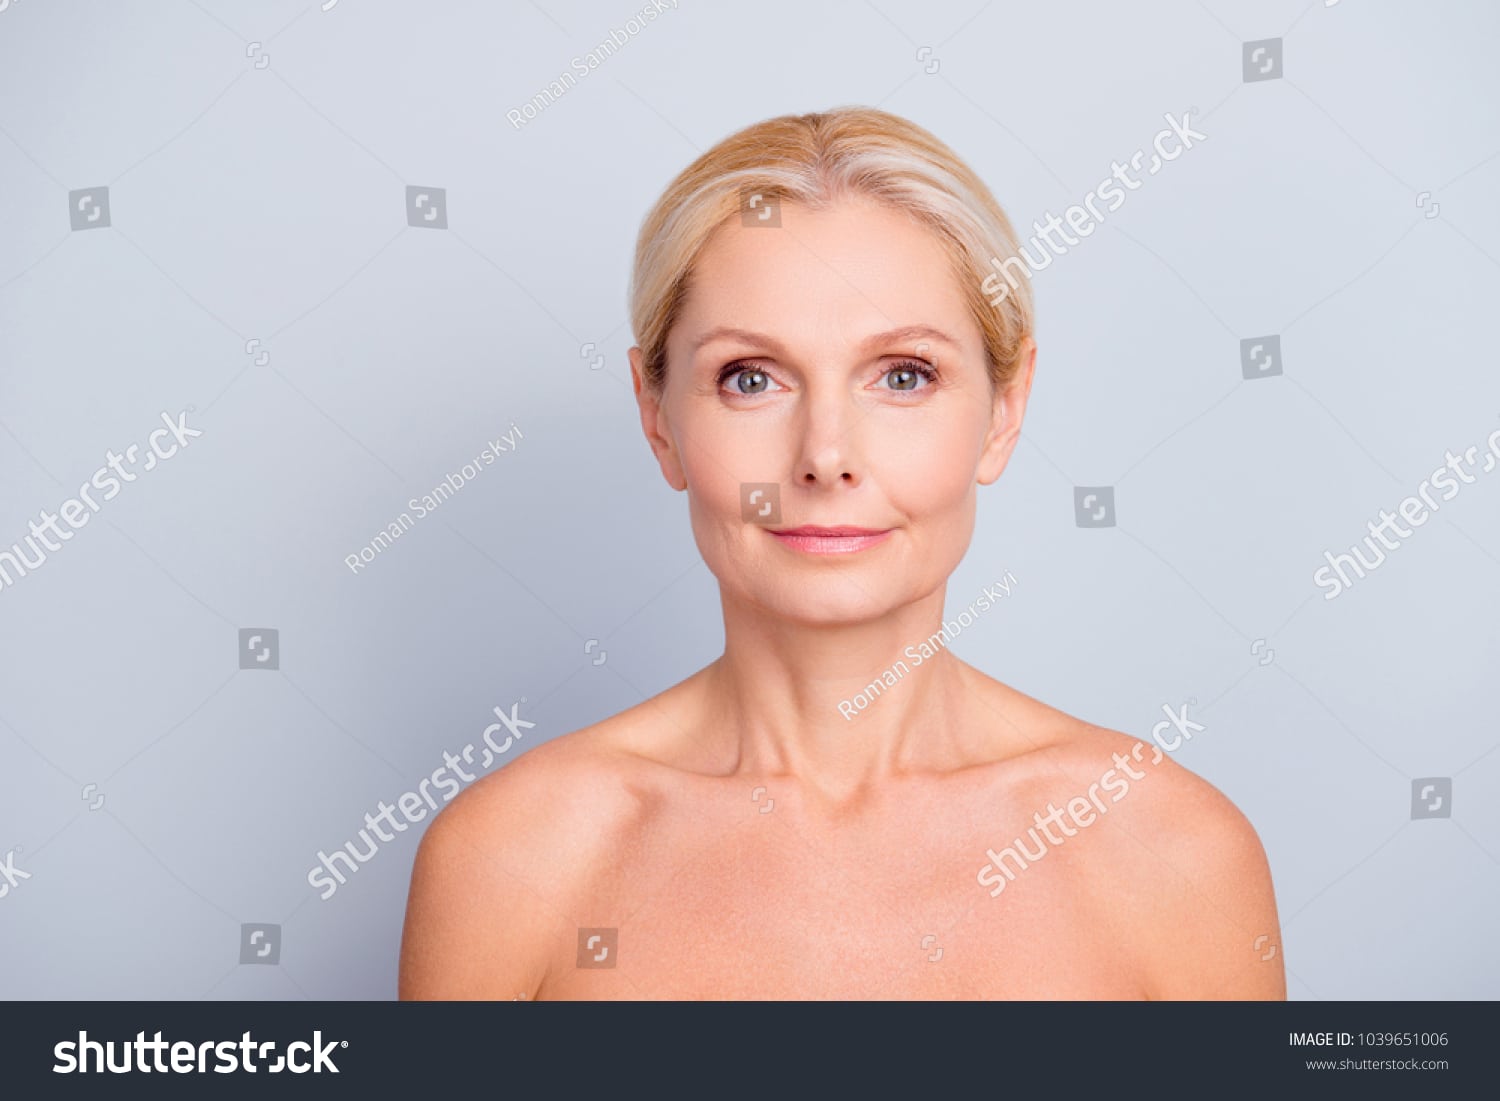 Nude Female Blonde